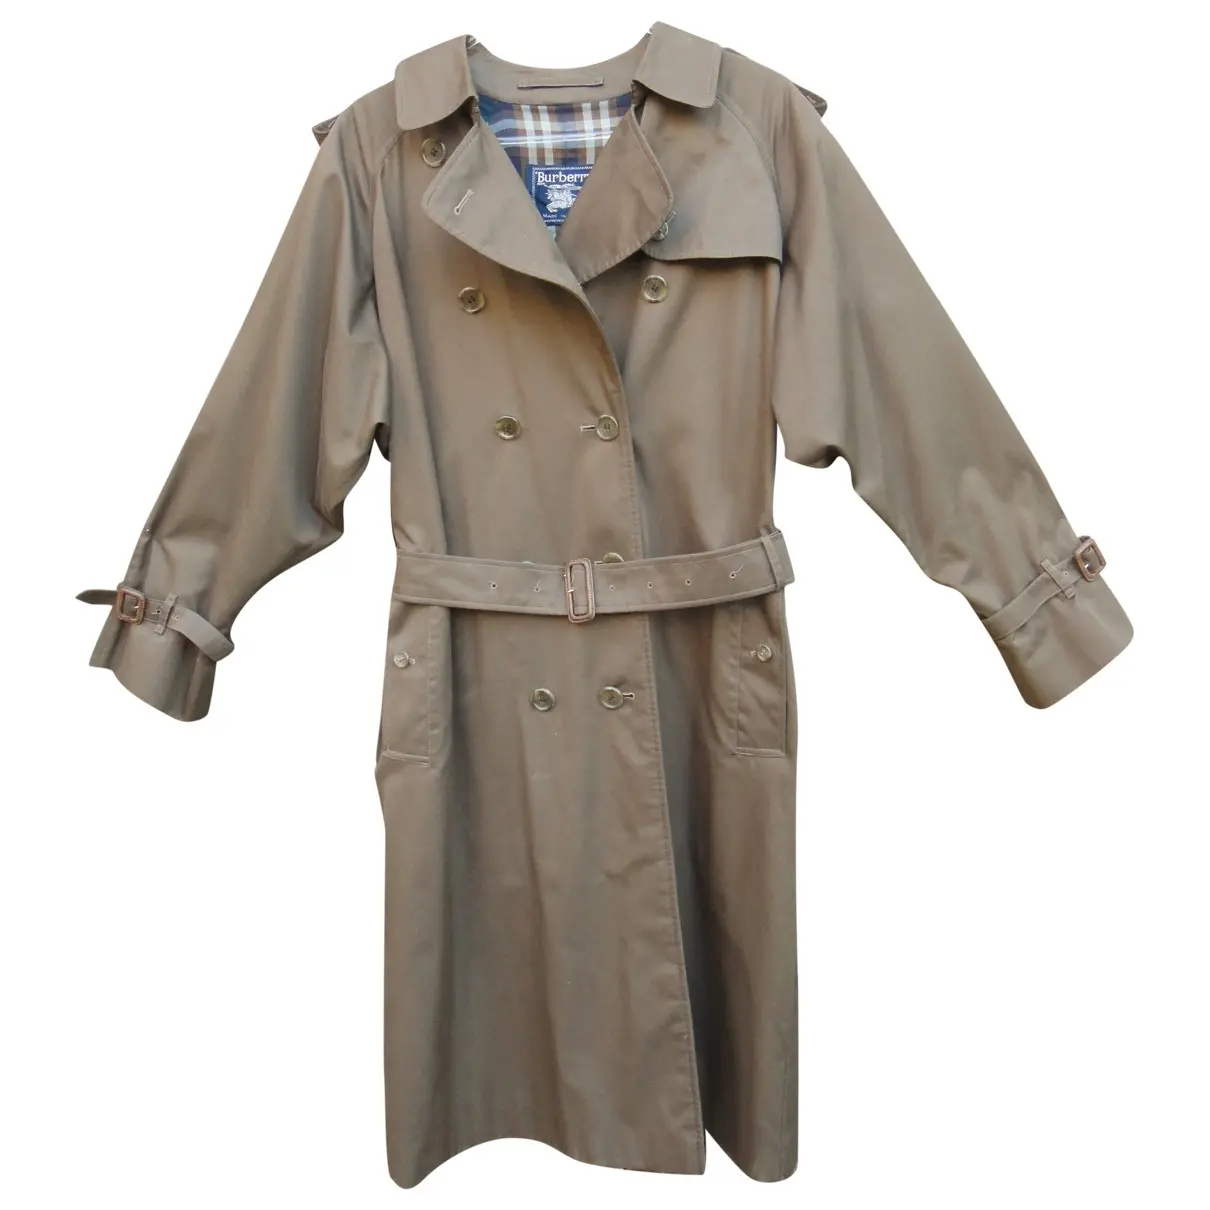 Trench coat Burberry - Vintage